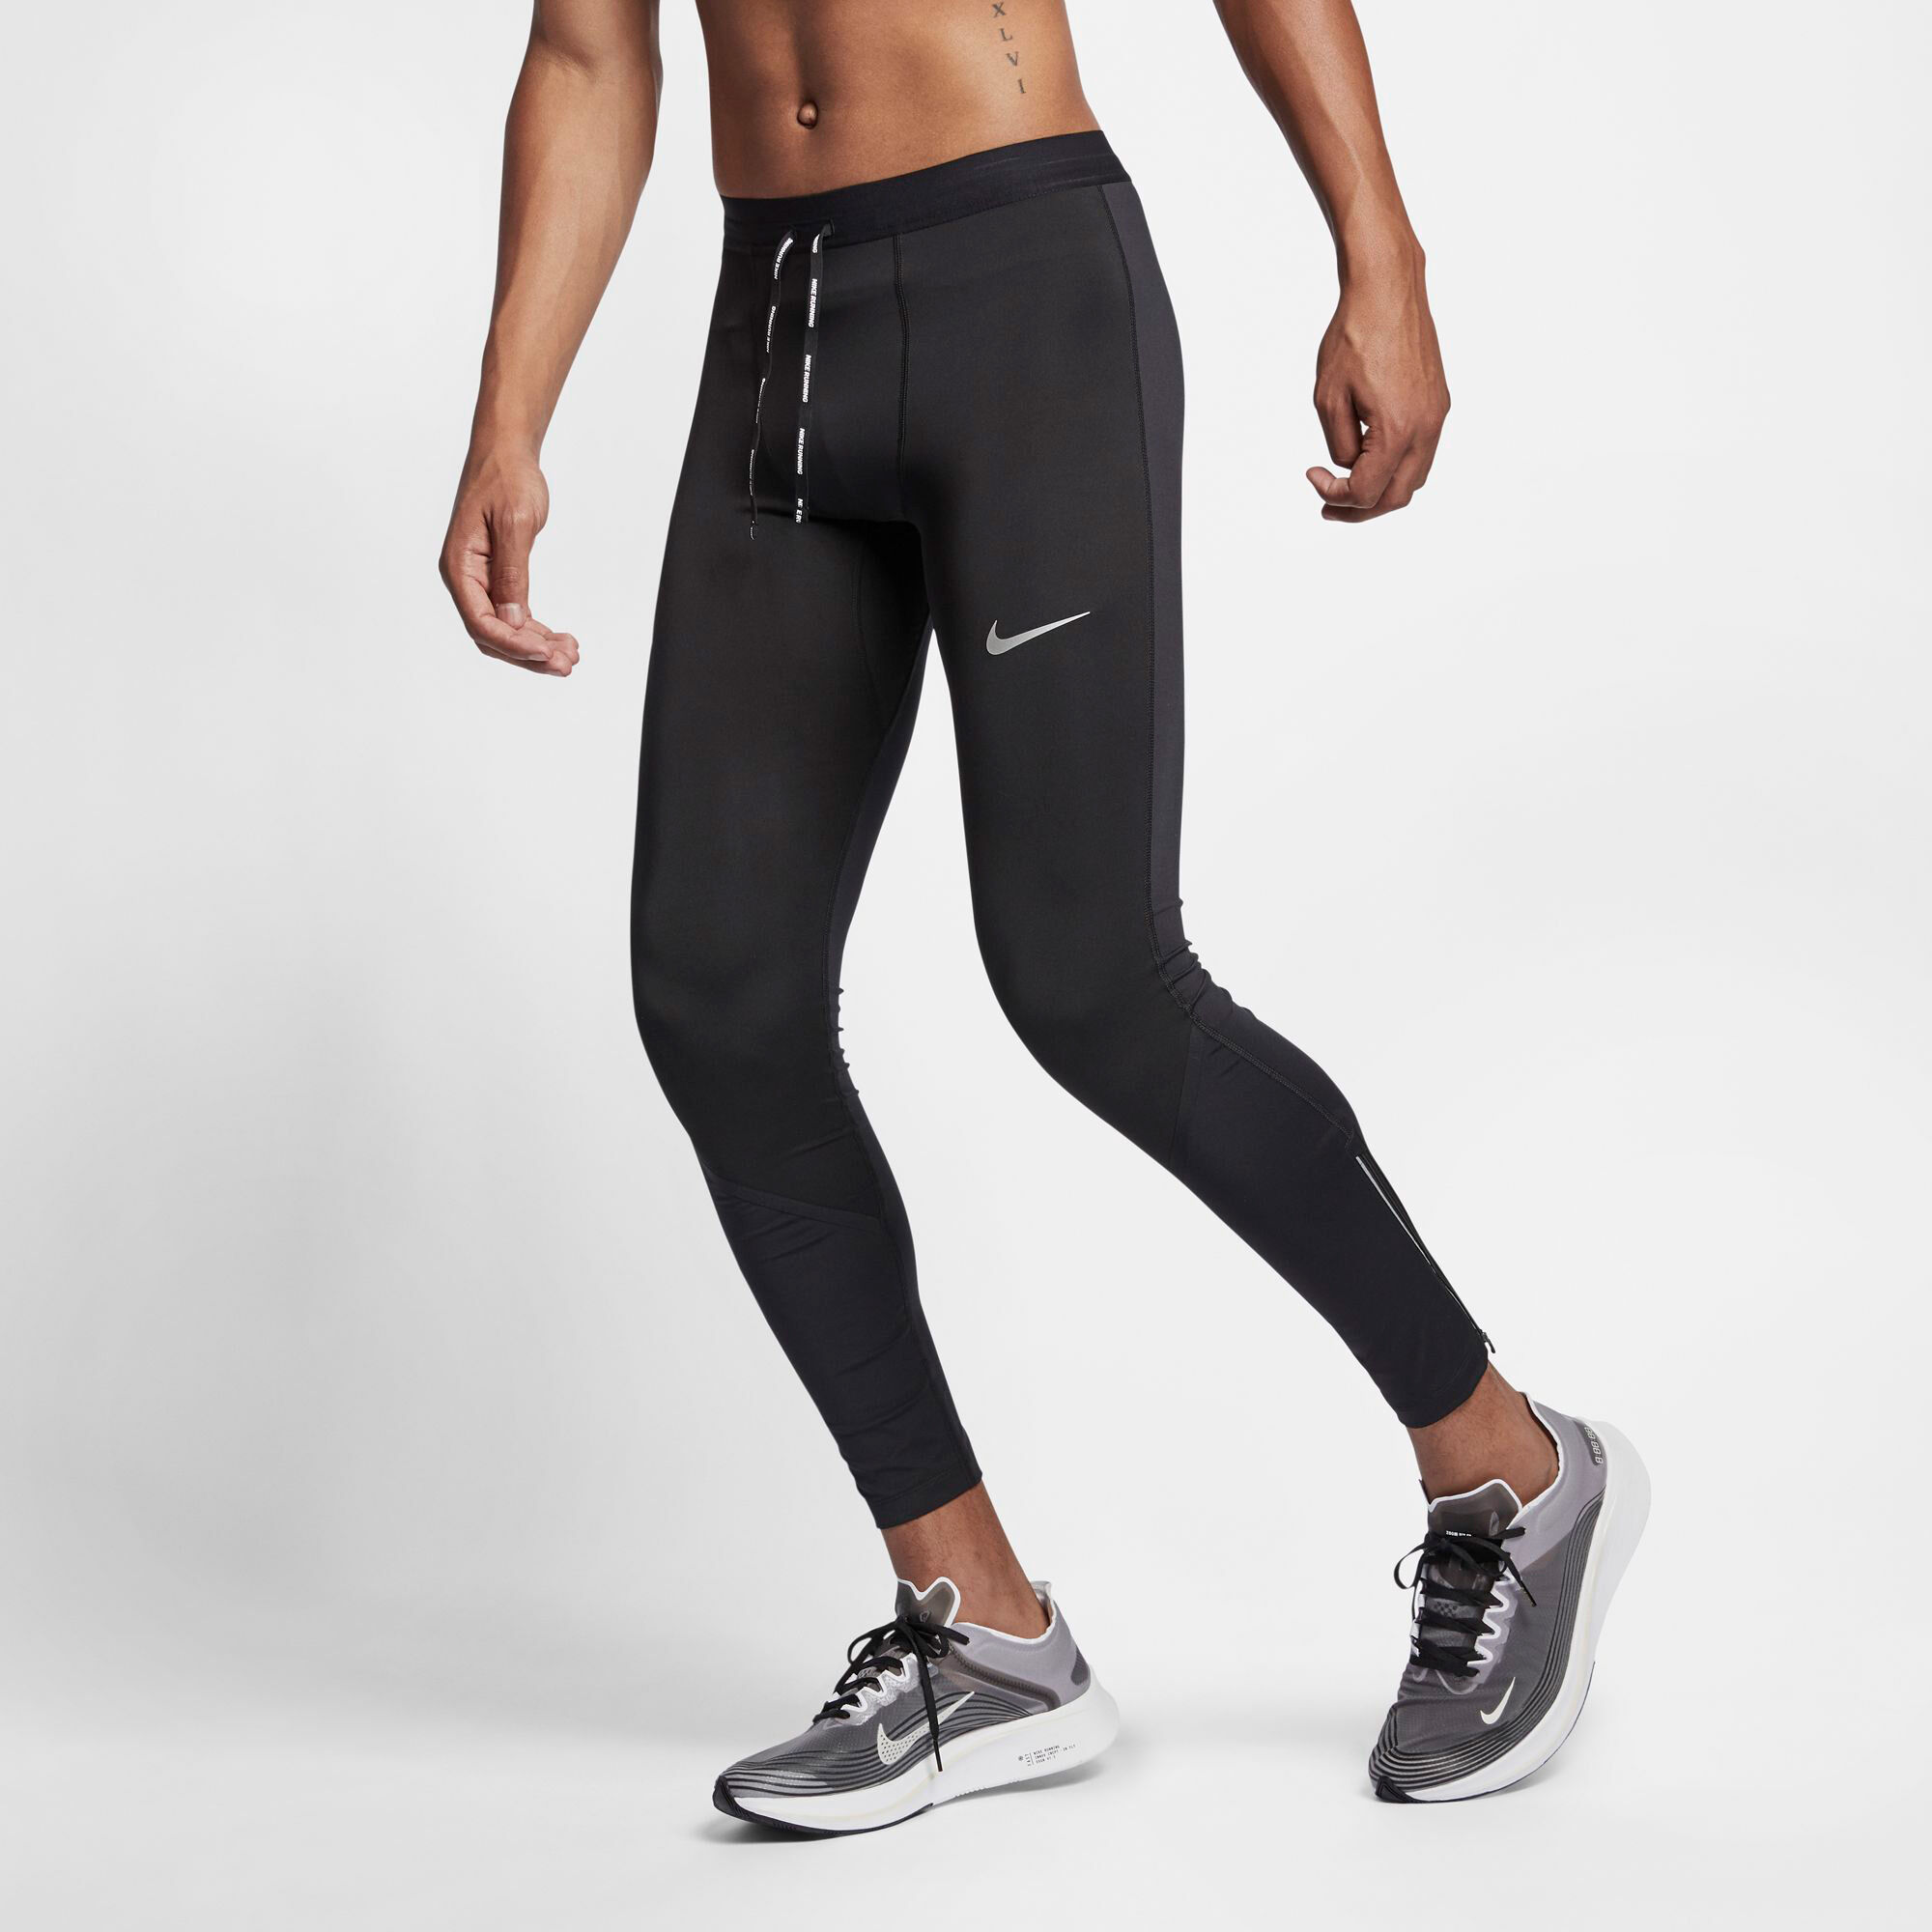 Nike Hardloopkleding Store, GET 58% OFF, sportsregras.com